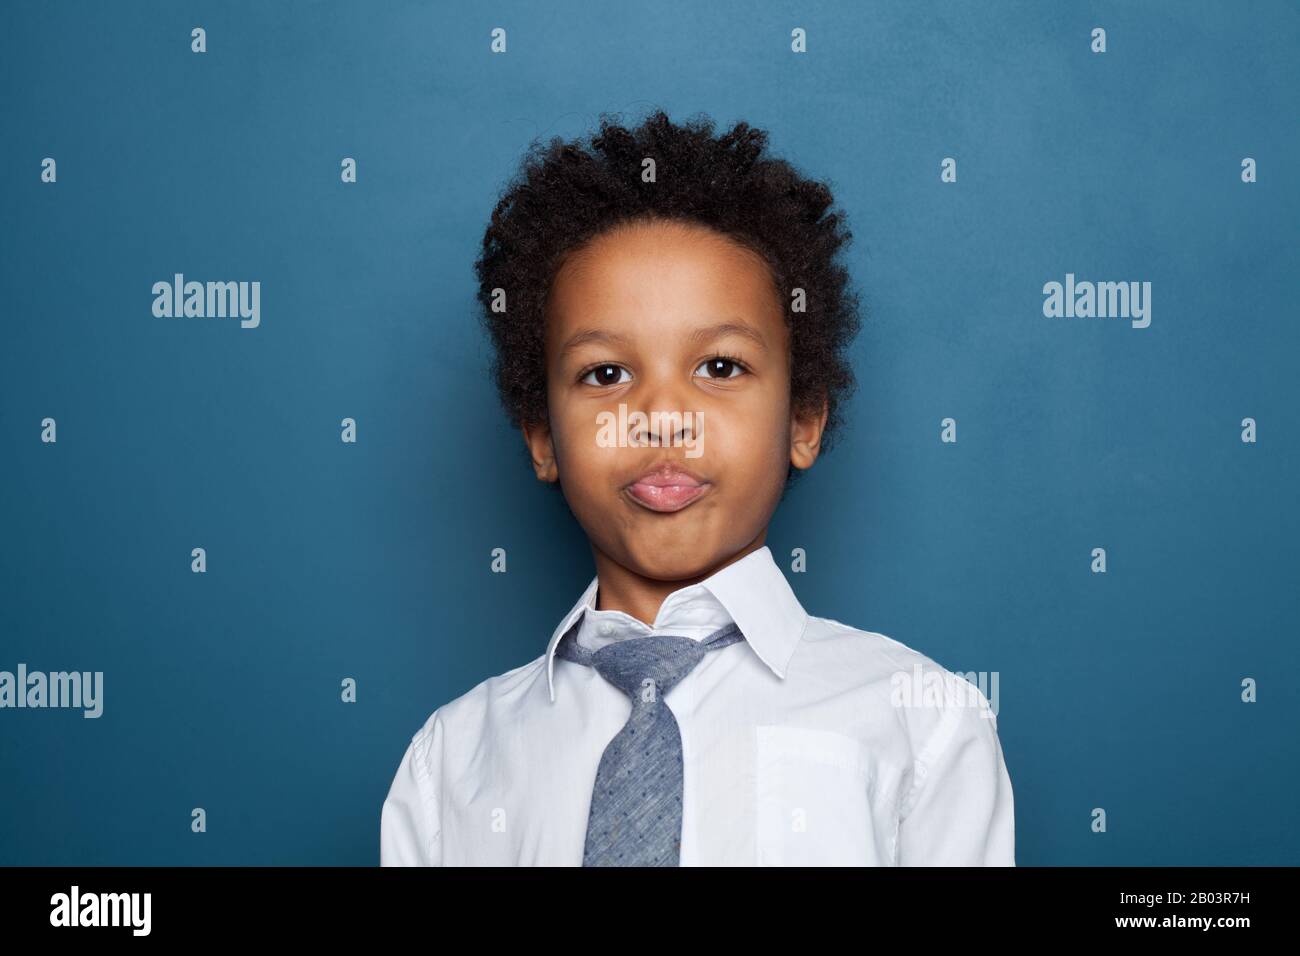 Portrait of little funny black kid boy on blue background Stock Photo